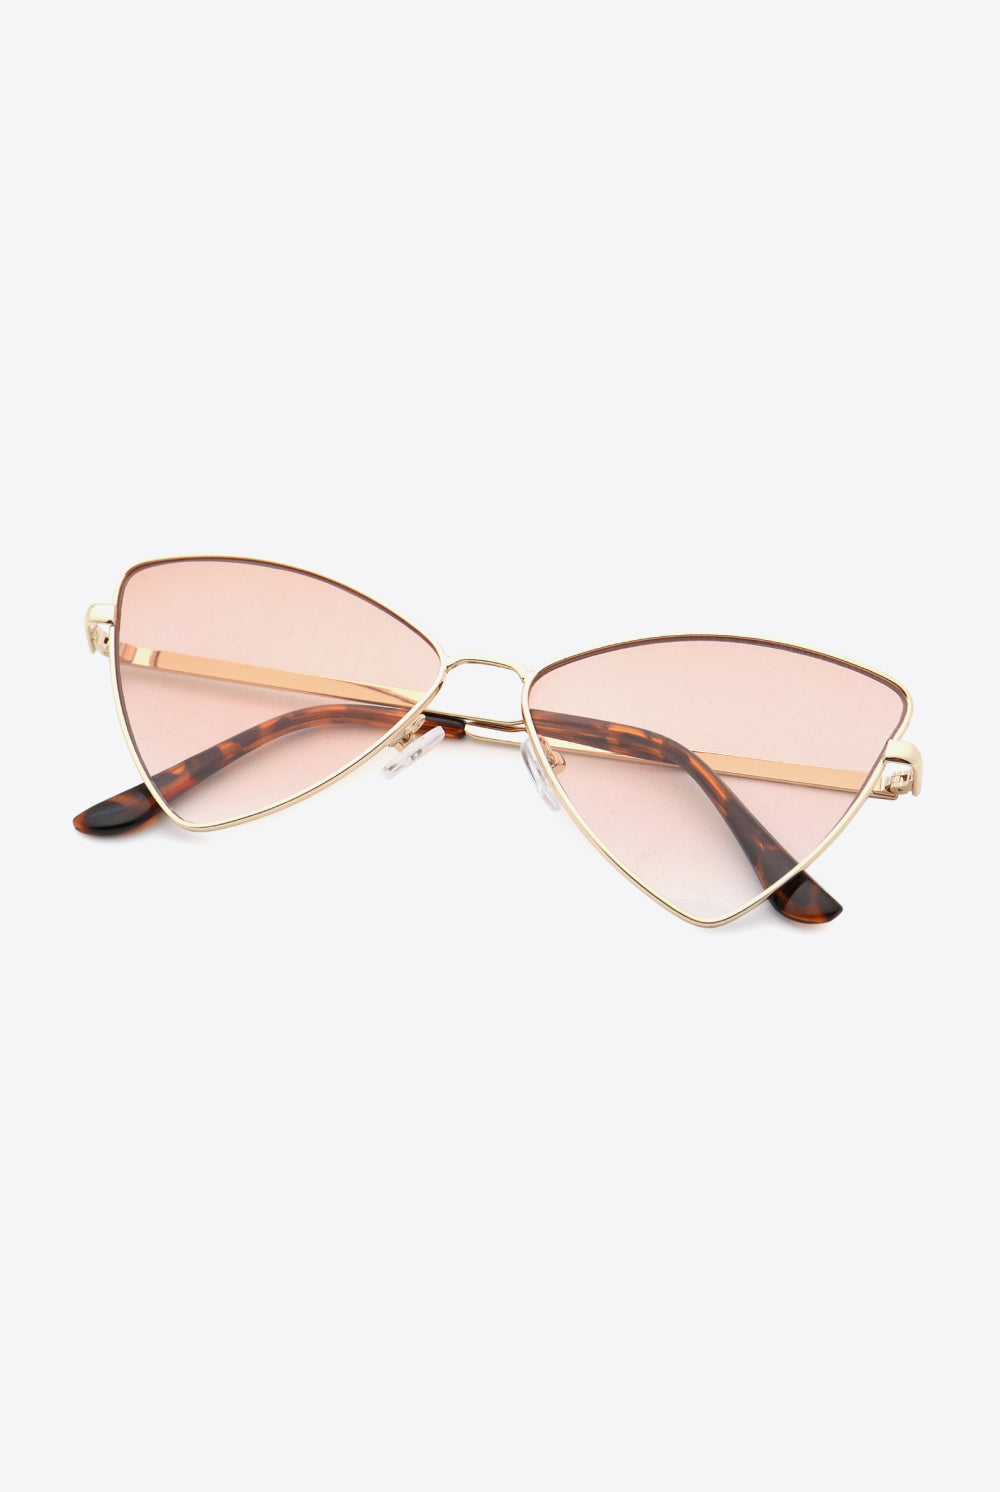 White Smoke My Future Metal Frame Cat-Eye Sunglasses- Pink Sunglasses